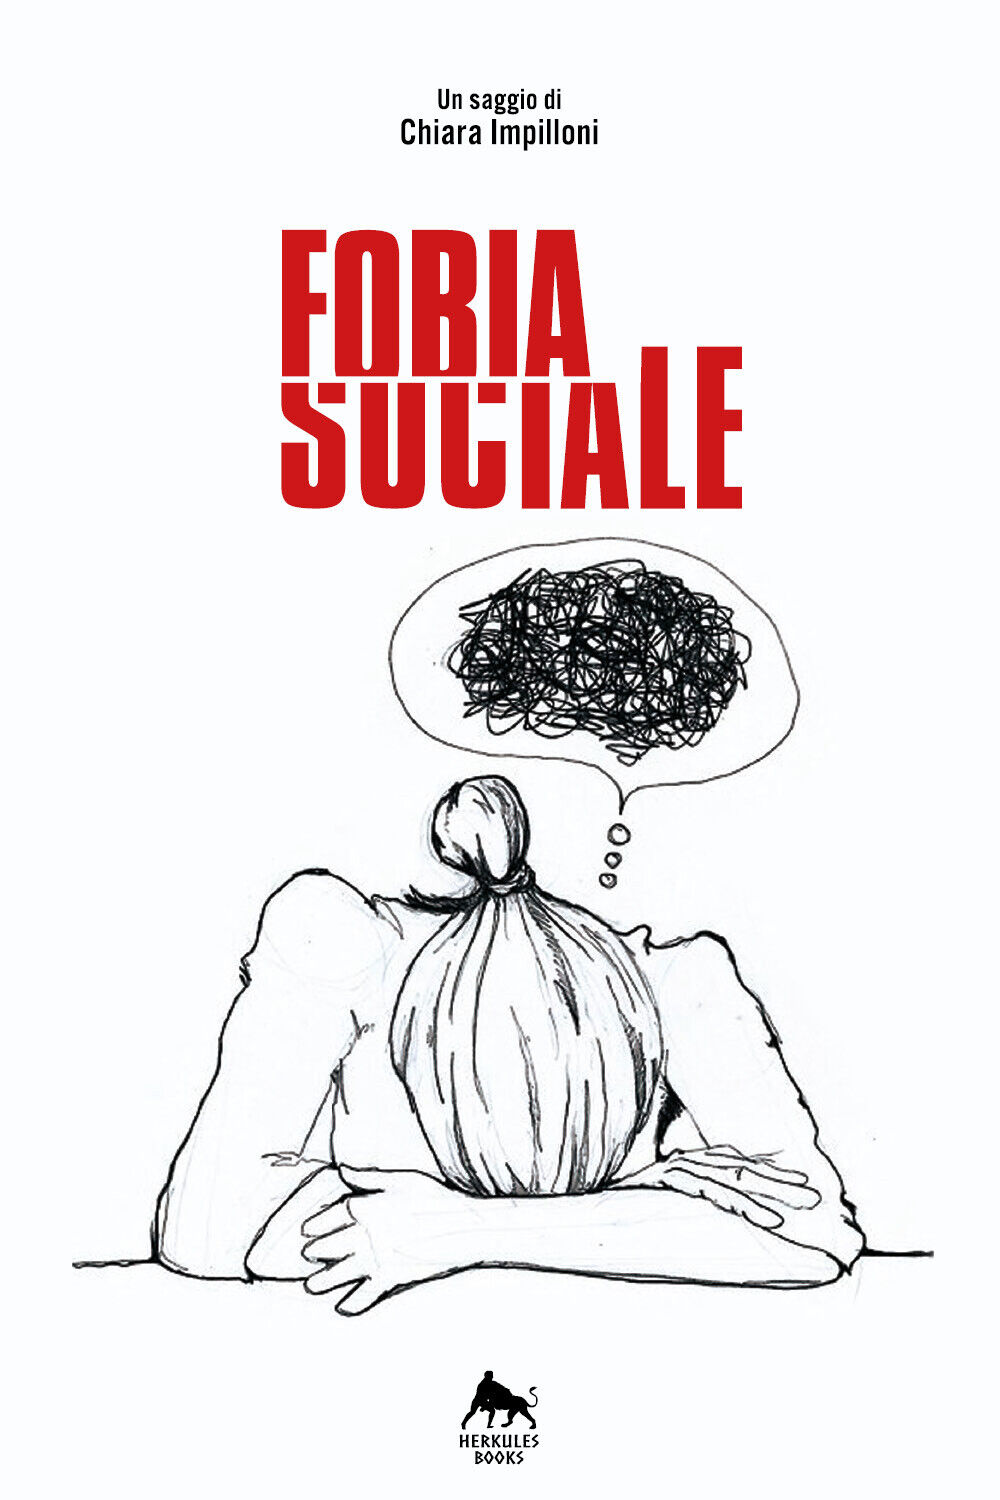 Fobia sociale  di Chiara Impilloni,  2018,  Herkules Books